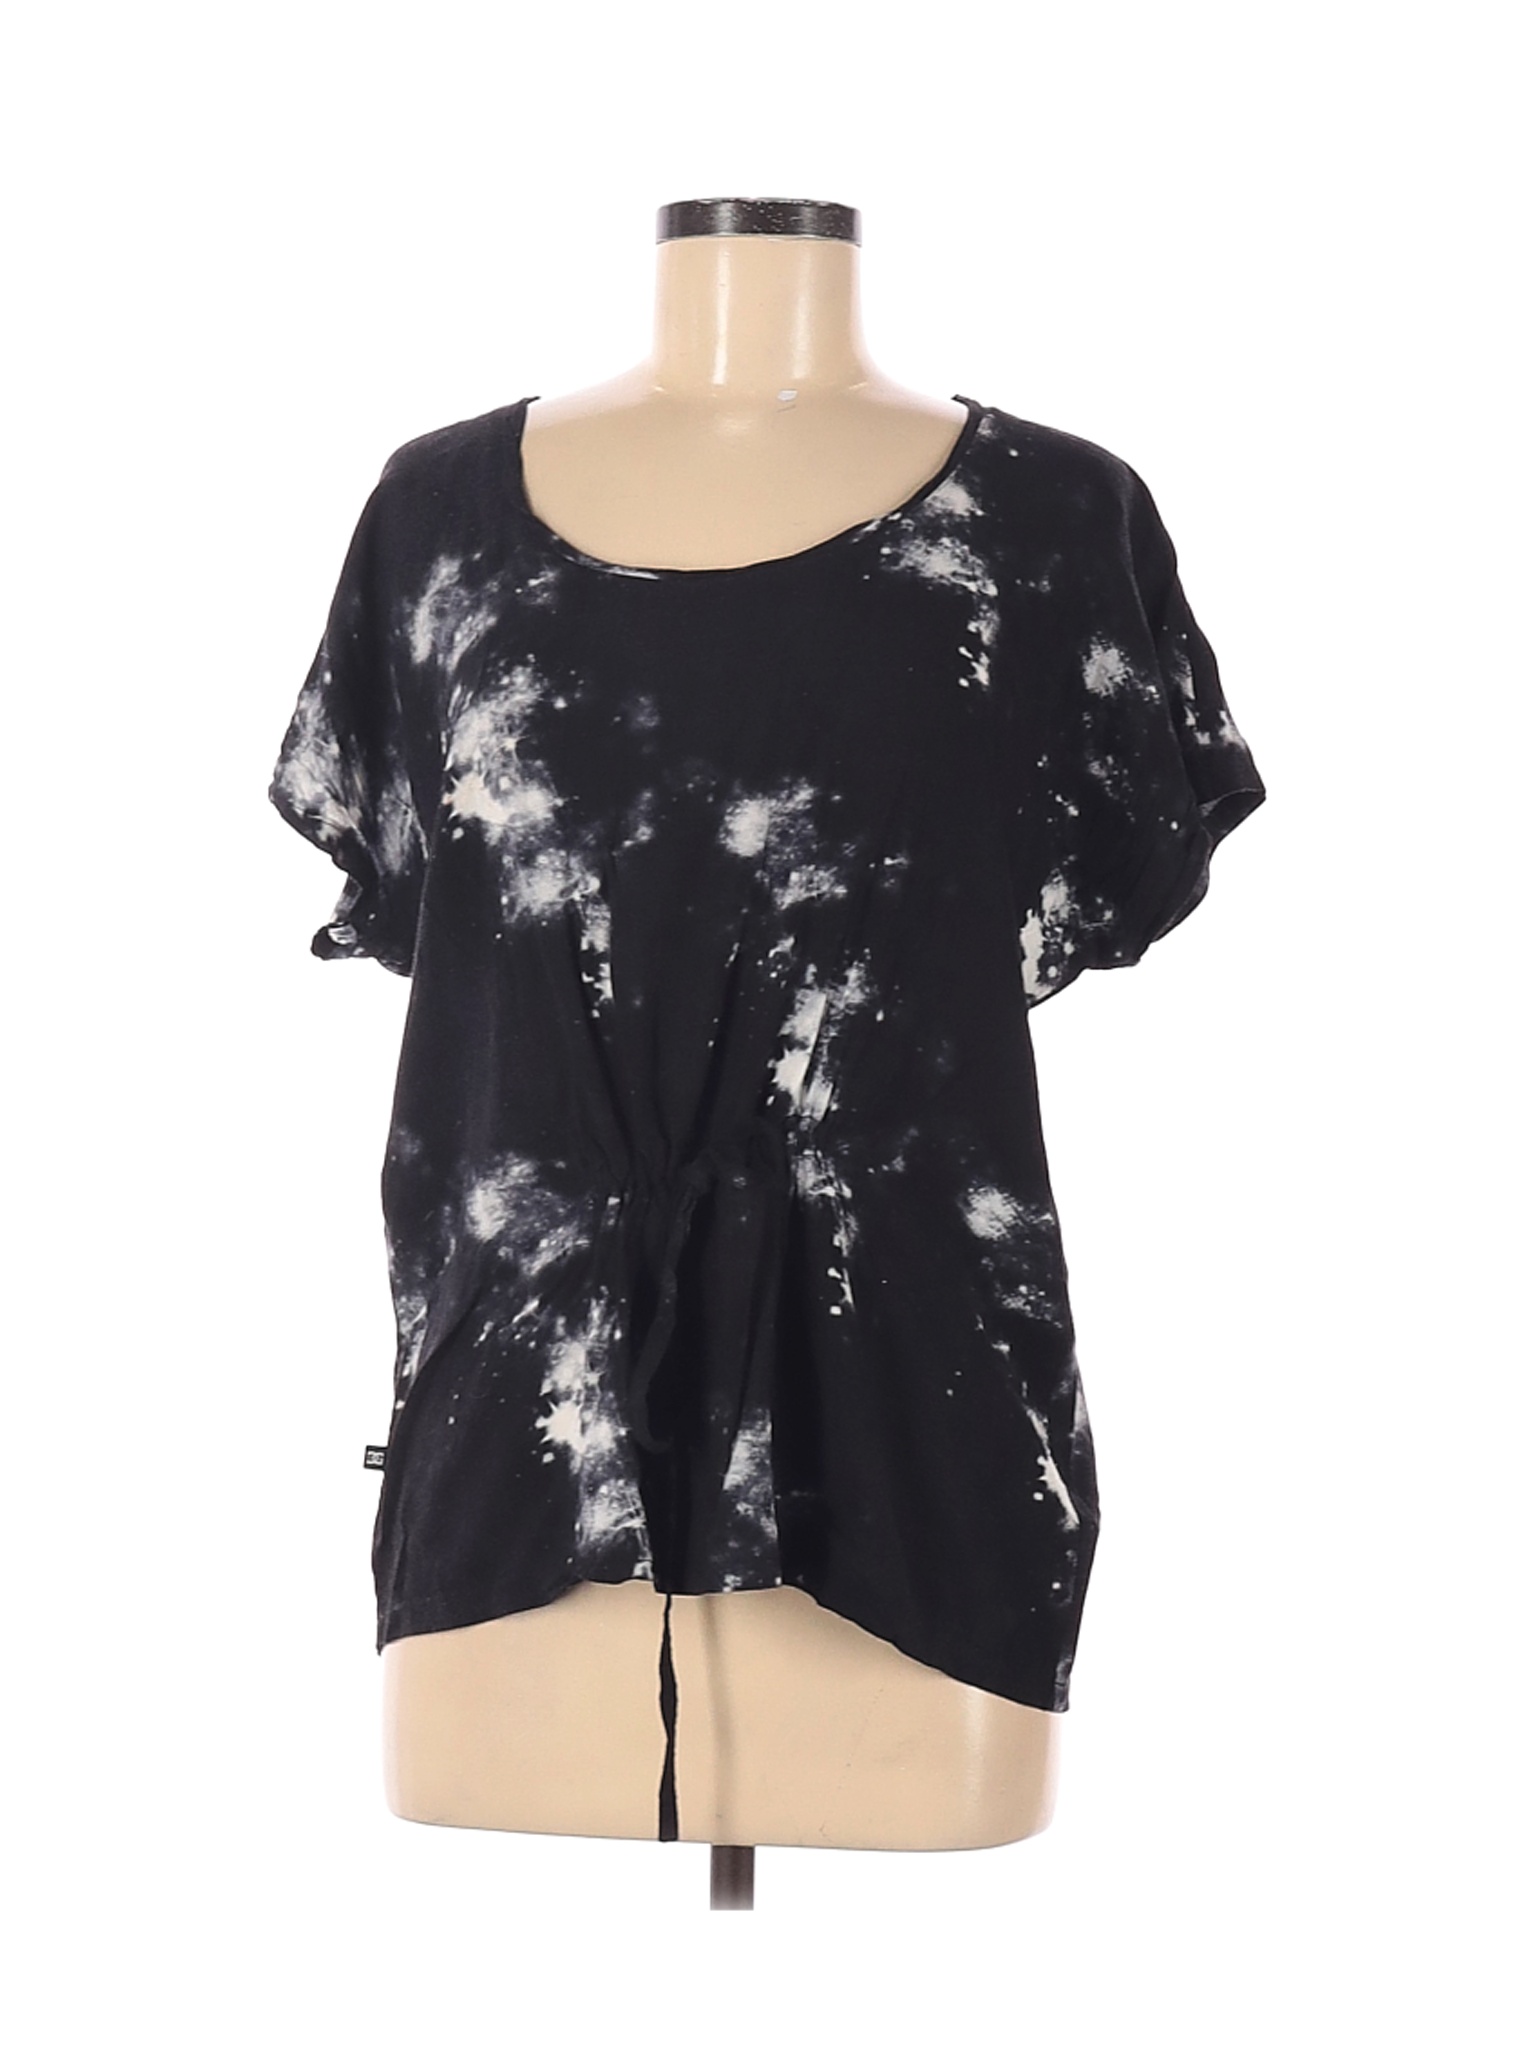 DC Women Black Short Sleeve Top M | eBay